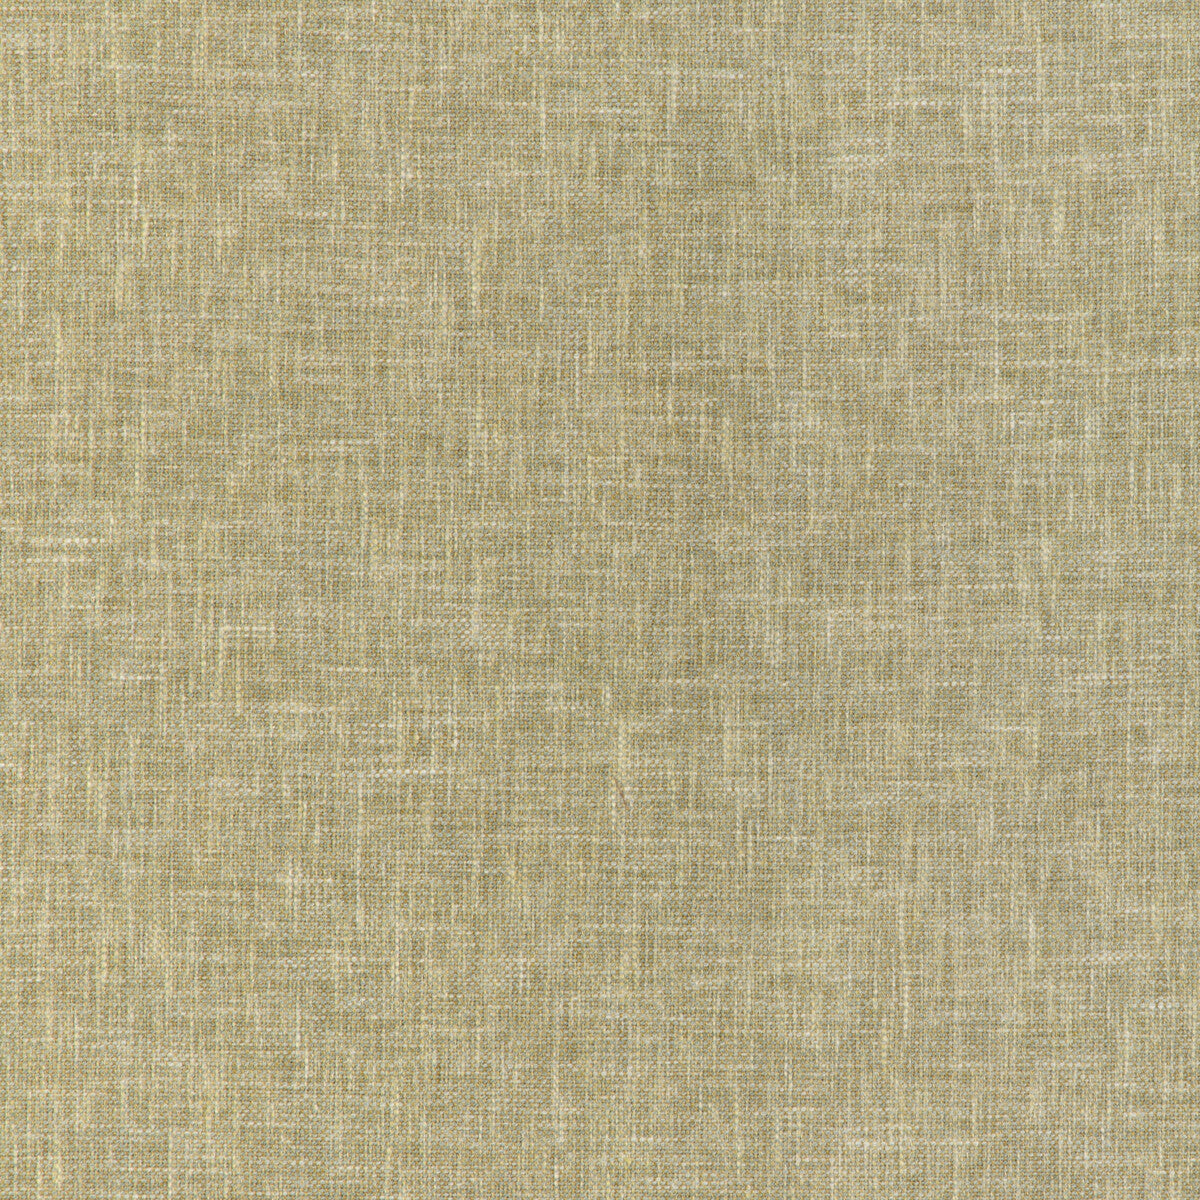 Kravet Smart fabric in 36657-123 color - pattern 36657.123.0 - by Kravet Smart in the Performance Kravetarmor collection